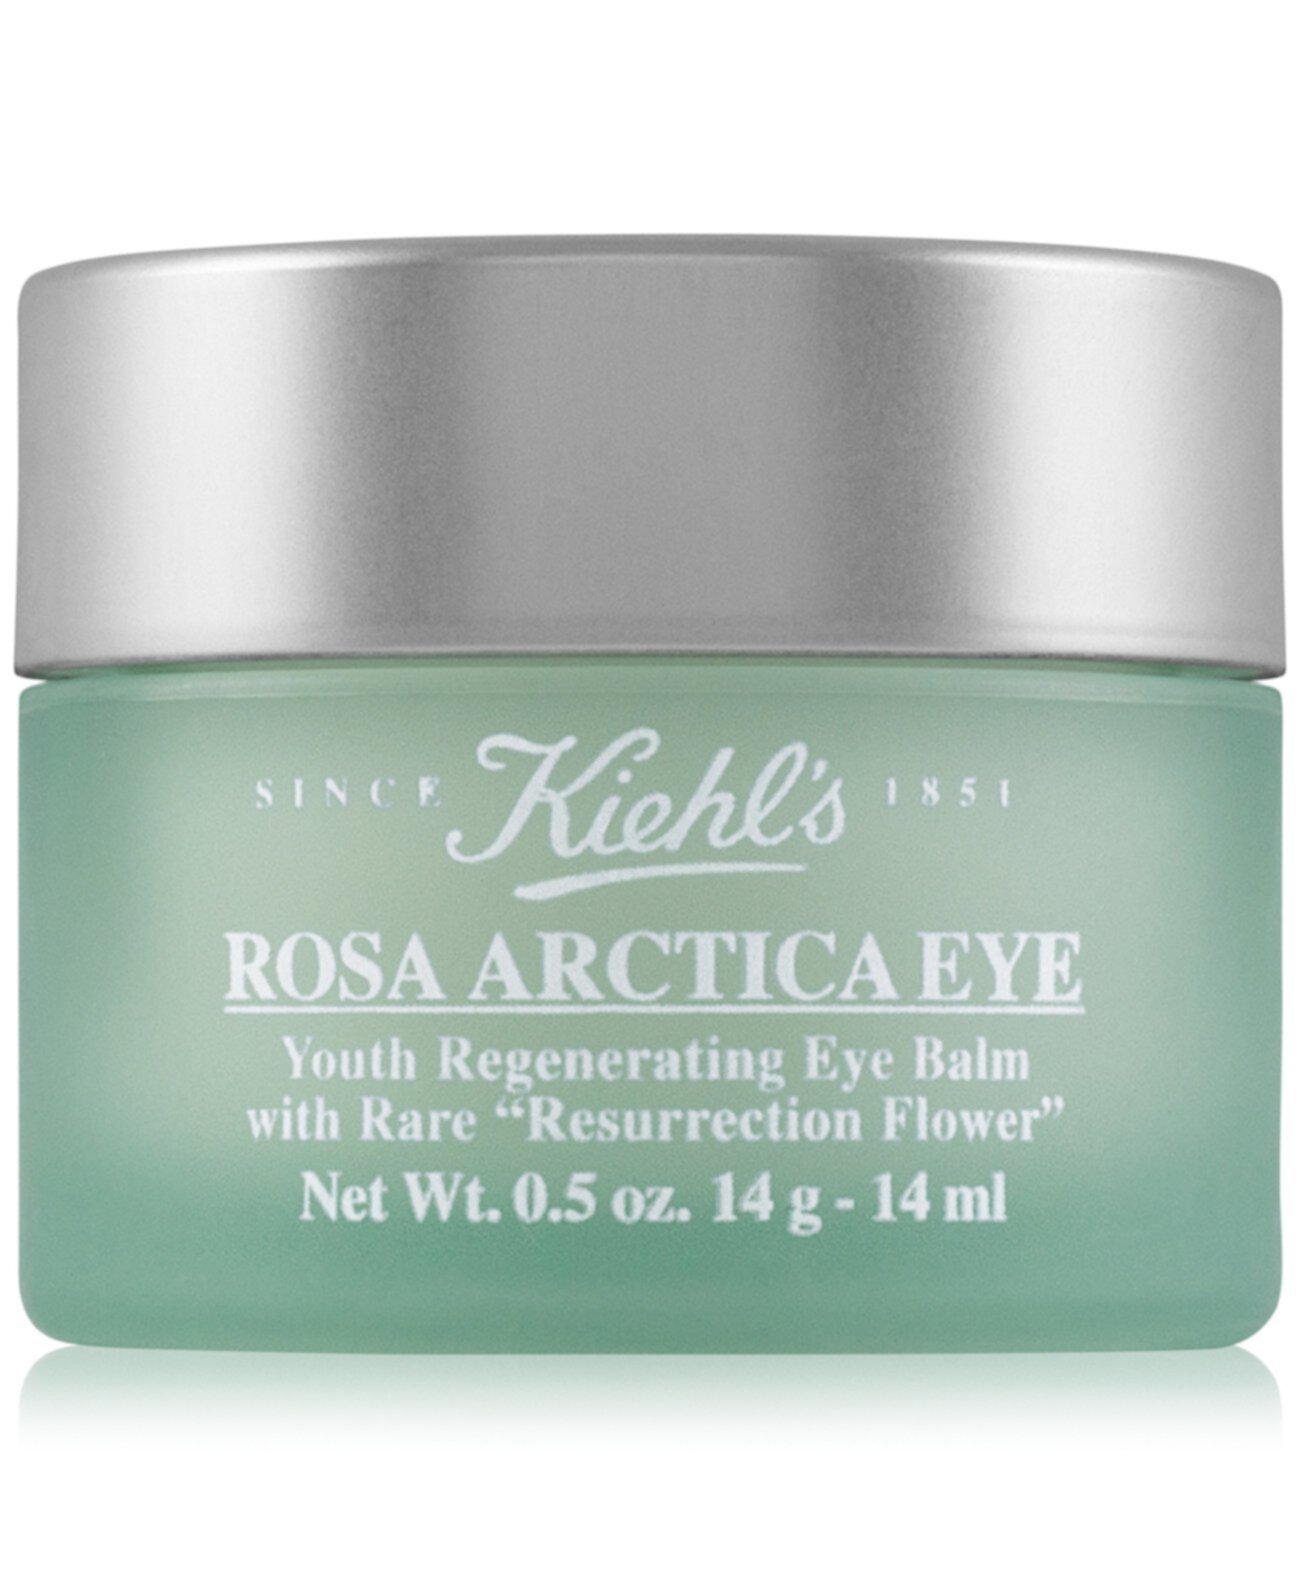 Rosa Arctica Eye Youth Восстанавливающий бальзам для глаз, 0,5 унции. Kiehl's Since 1851